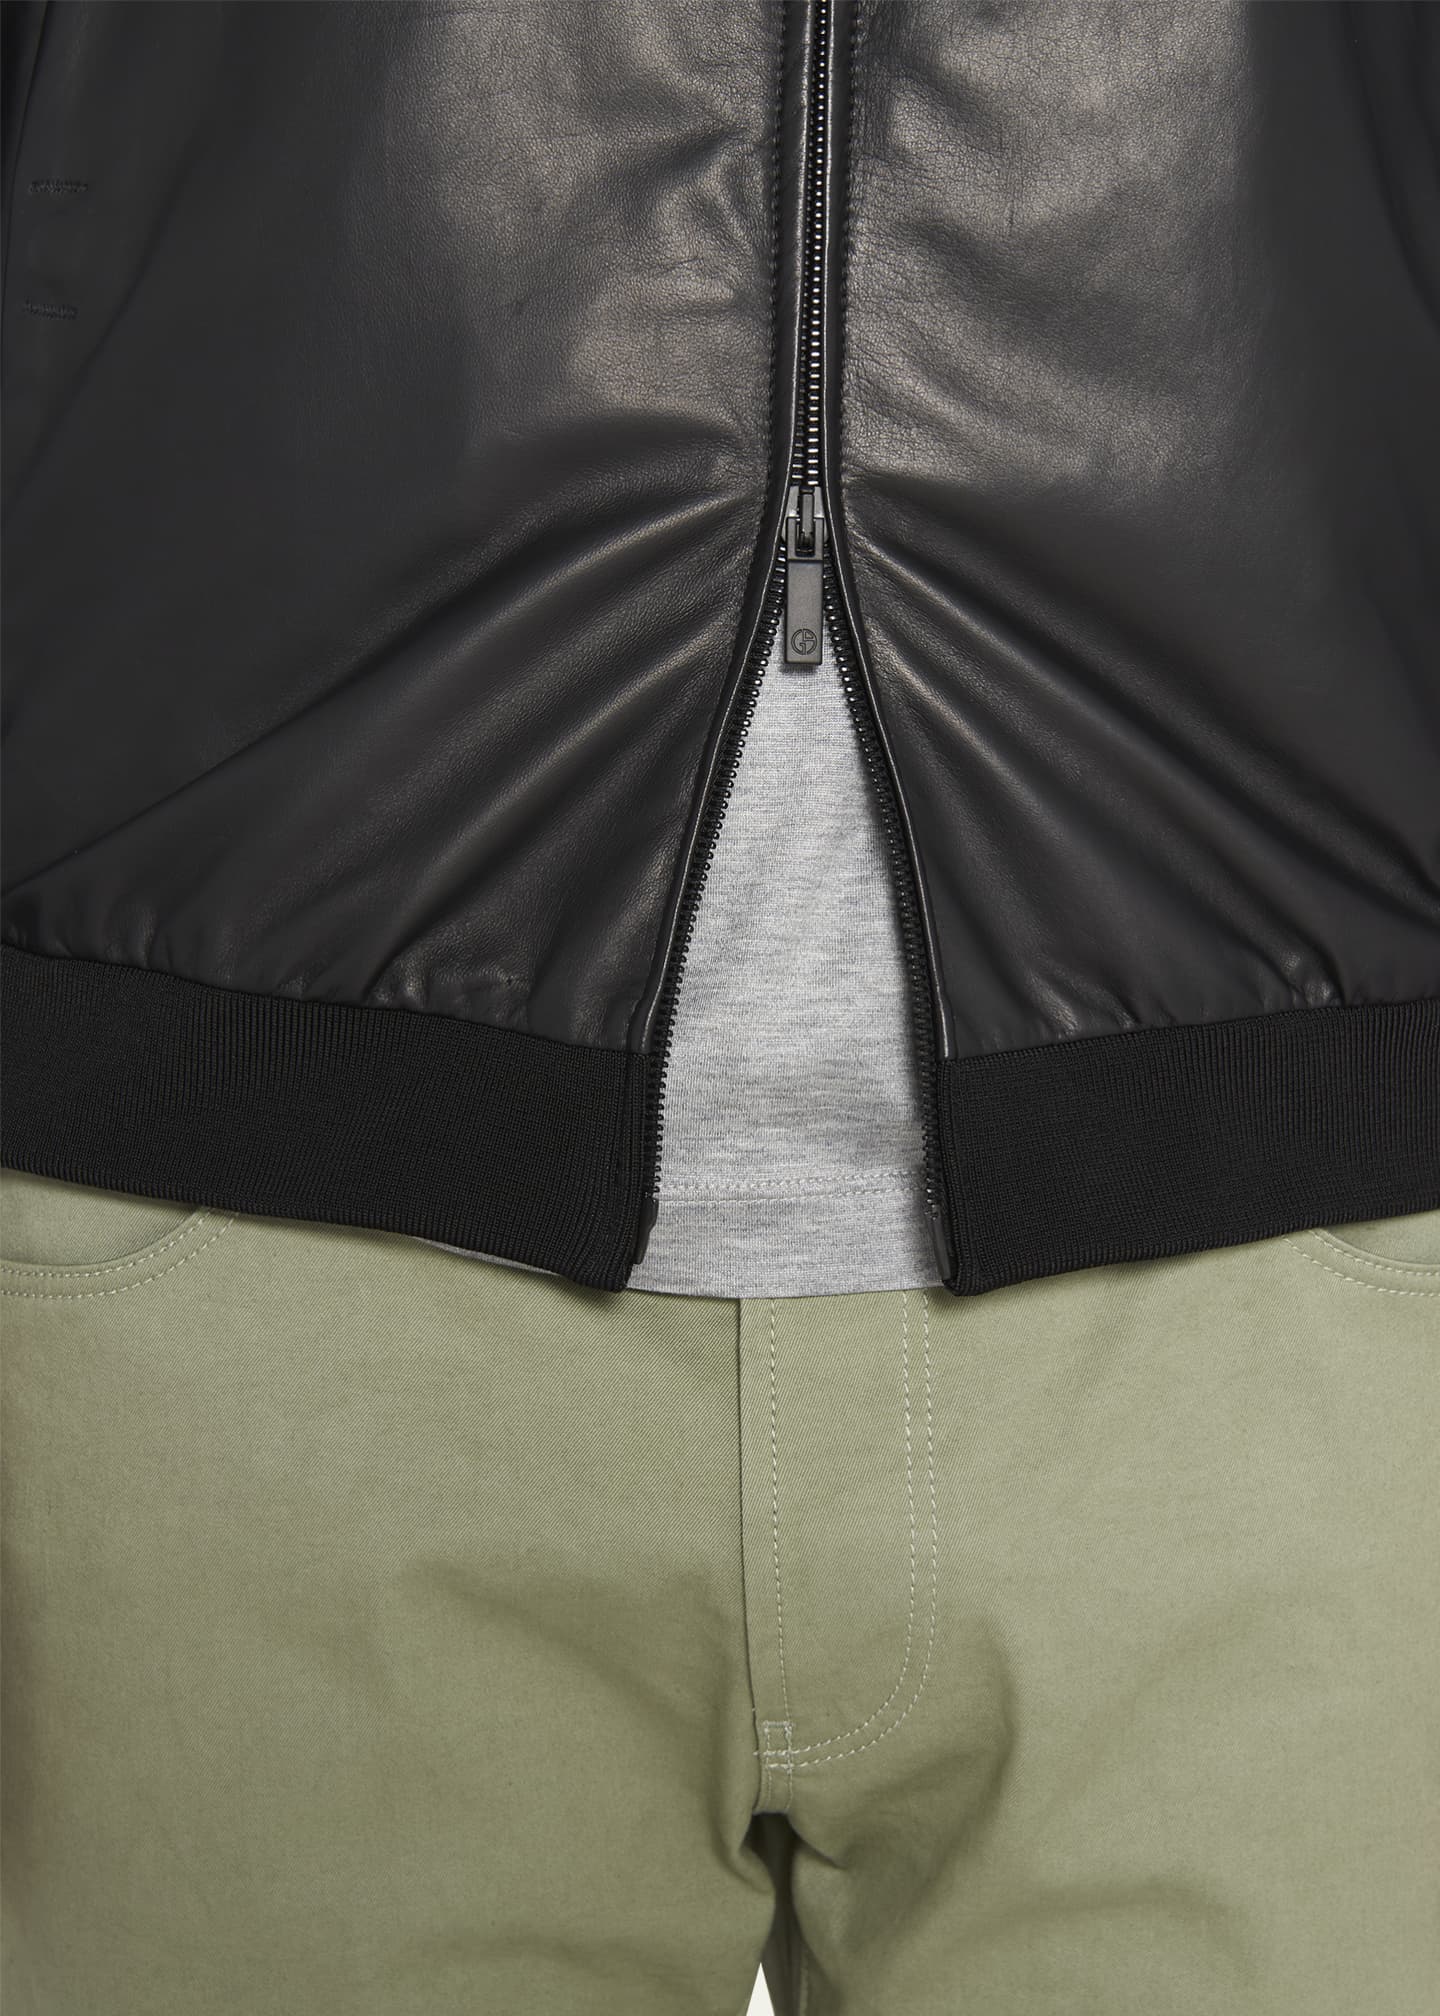 Giorgio Armani Men's Lambskin Leather Jacket - Bergdorf Goodman